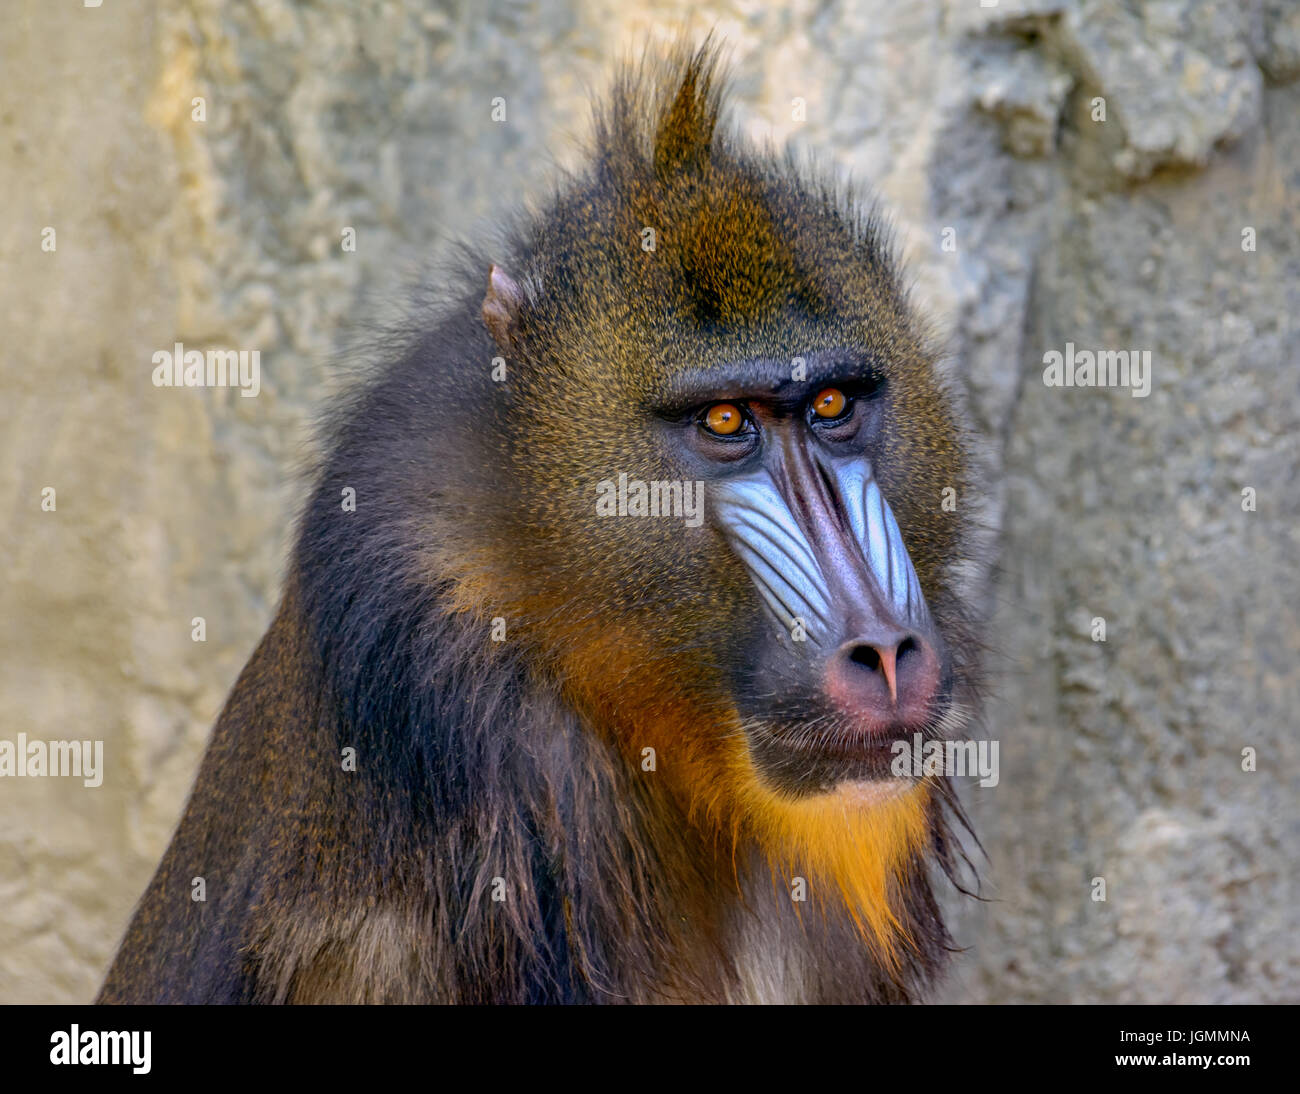 Mandrill (Mandrillus sphinx) Primate close-up, vivid eyes, expressive face Stock Photo